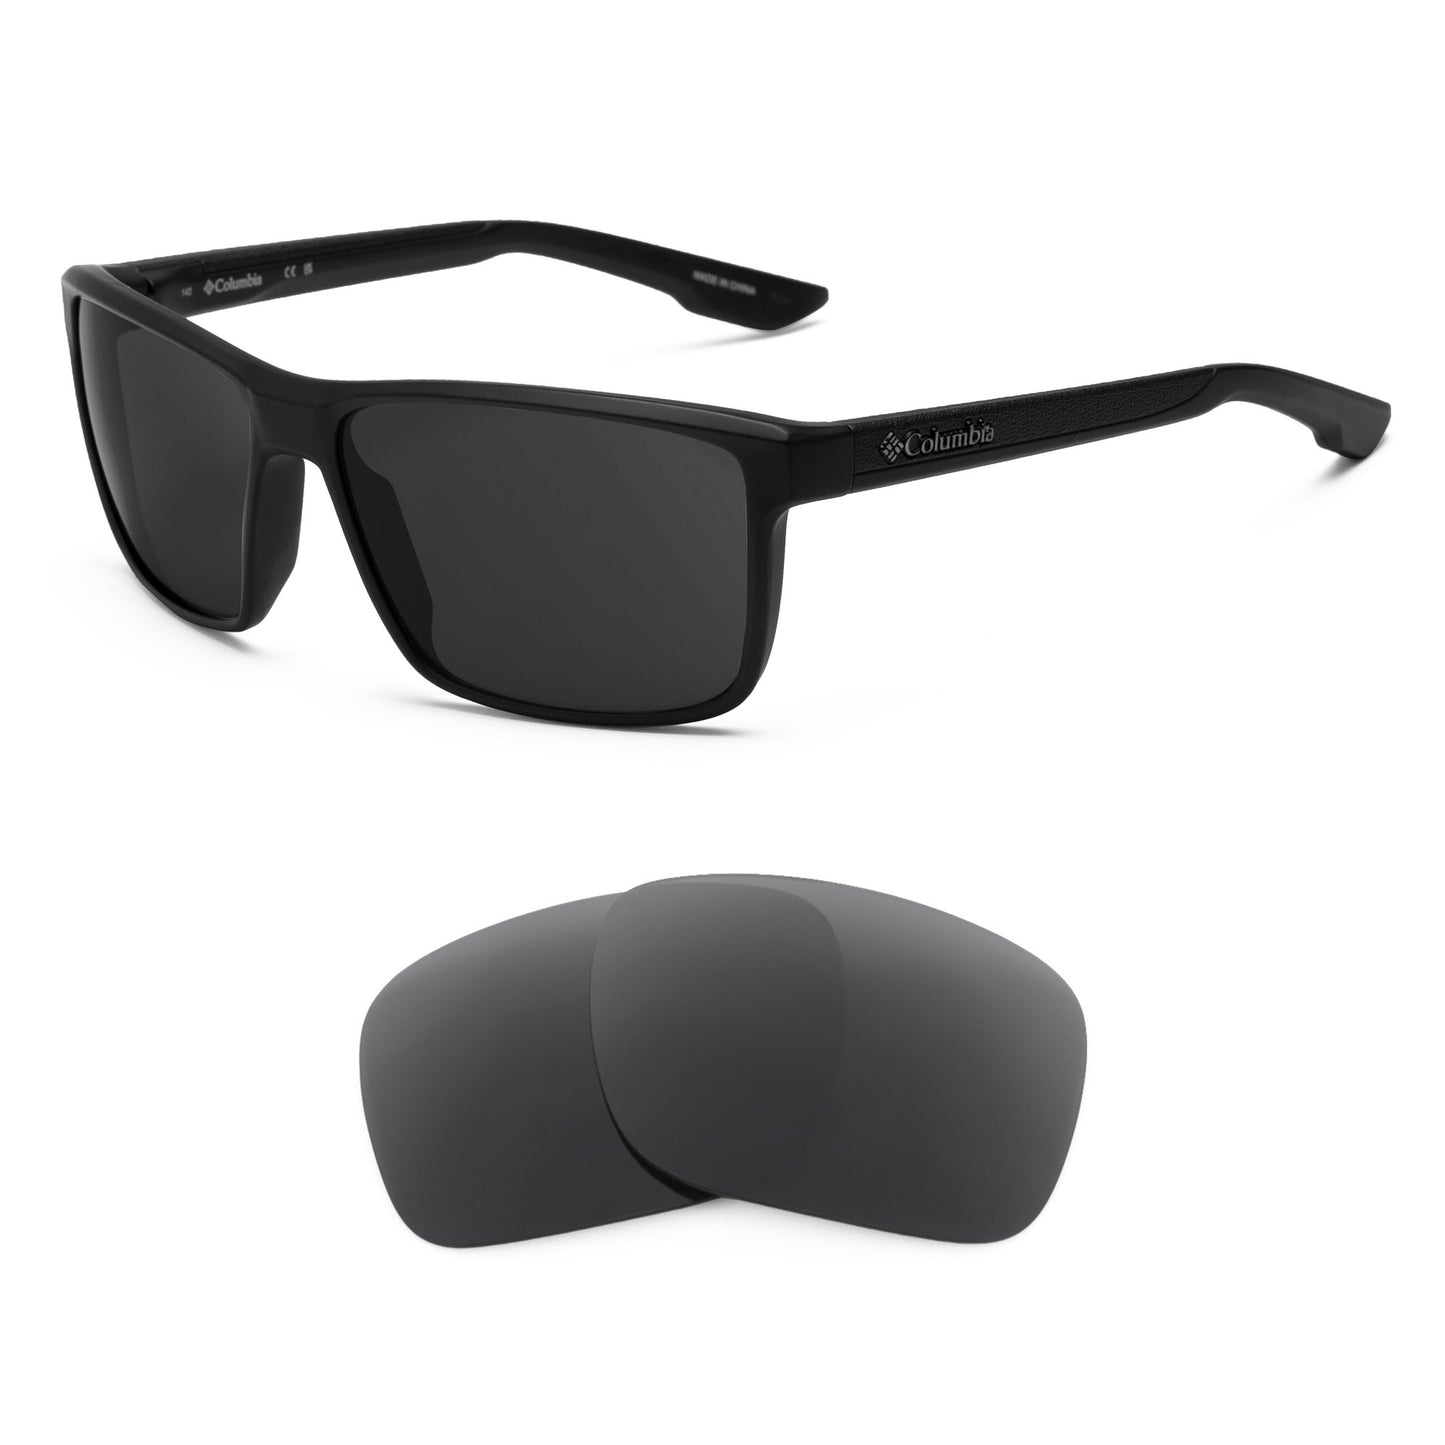 Columbia Hazen sunglasses with replacement lenses